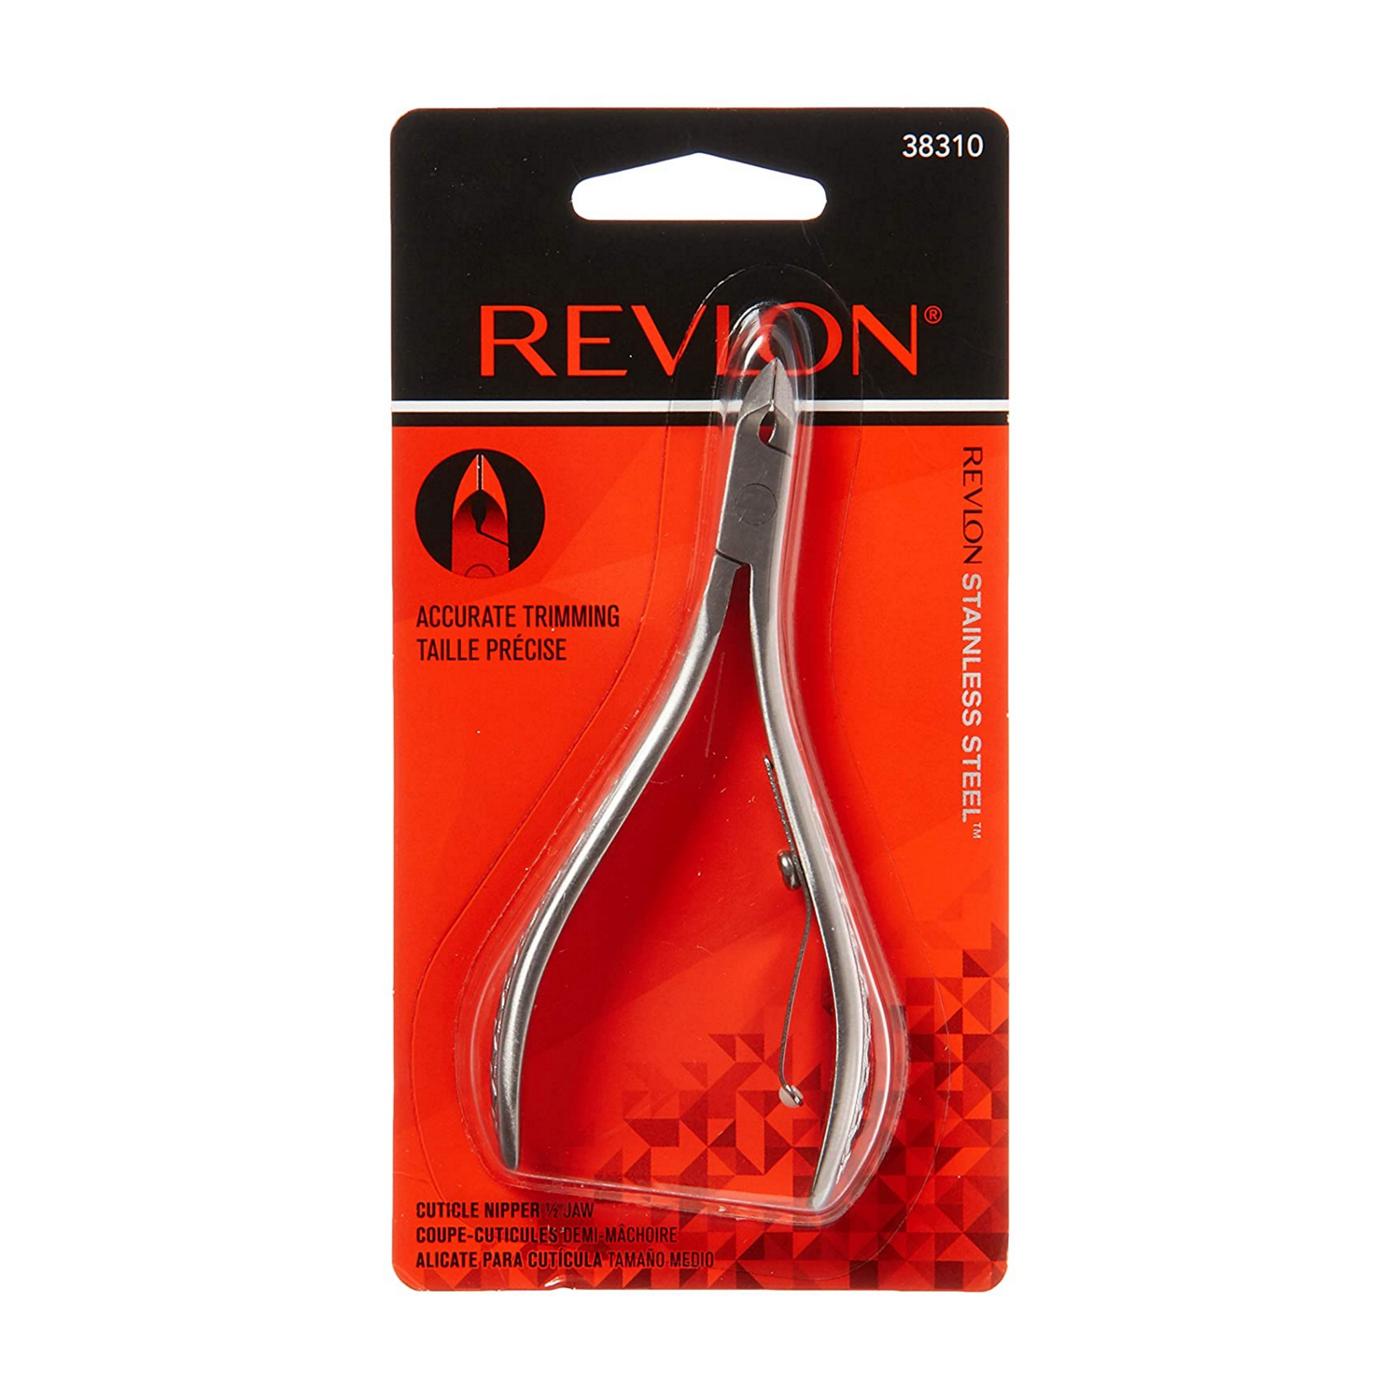 Revlon 1/2 Jaw Cuticle Nipper; image 1 of 5